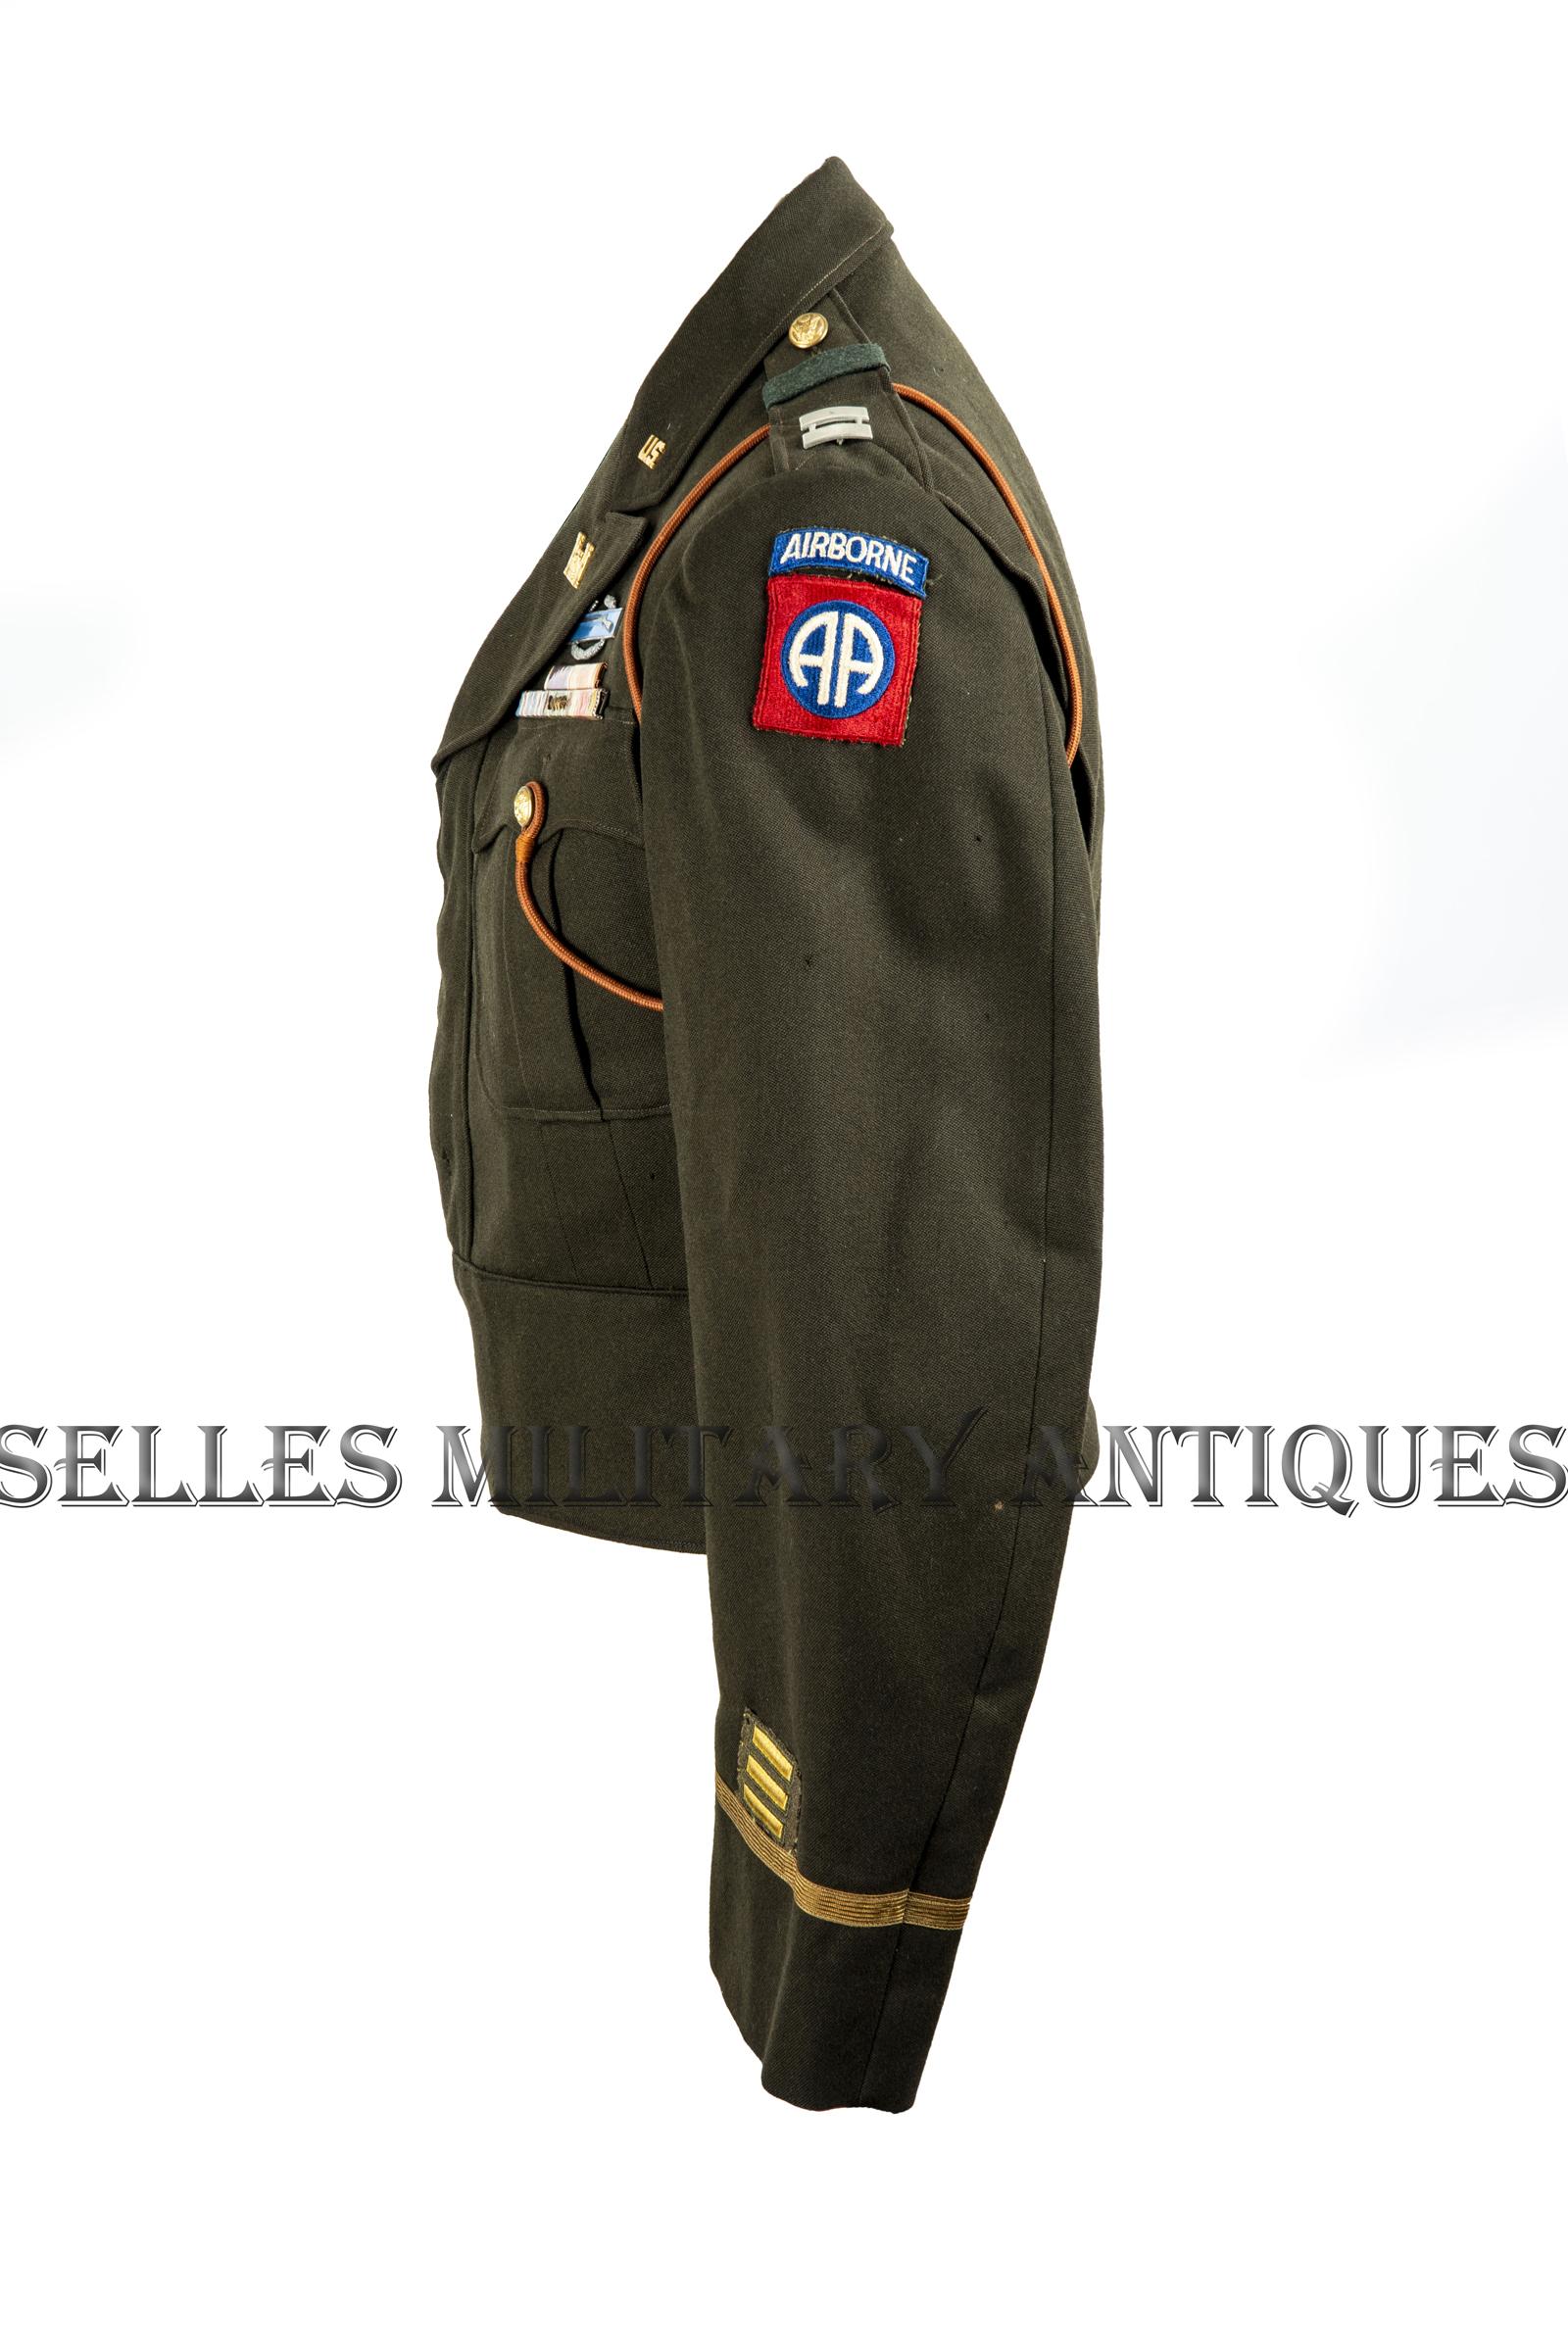 blouson-ike-jacket-officier-engineer-82eme-airborne-us-(4)